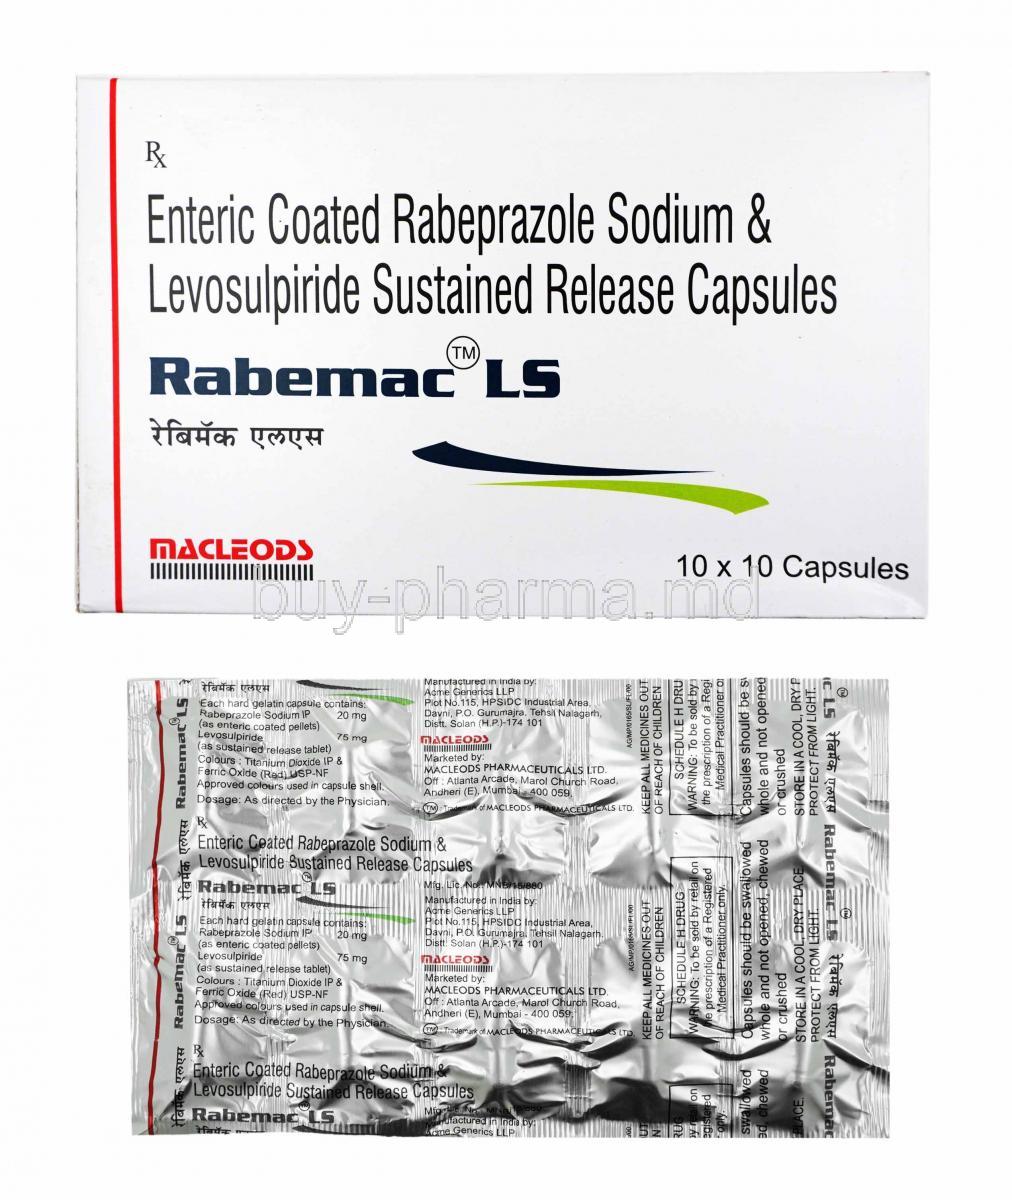 Rabemac LS, Levosulpiride and Rabeprazole box and capsules